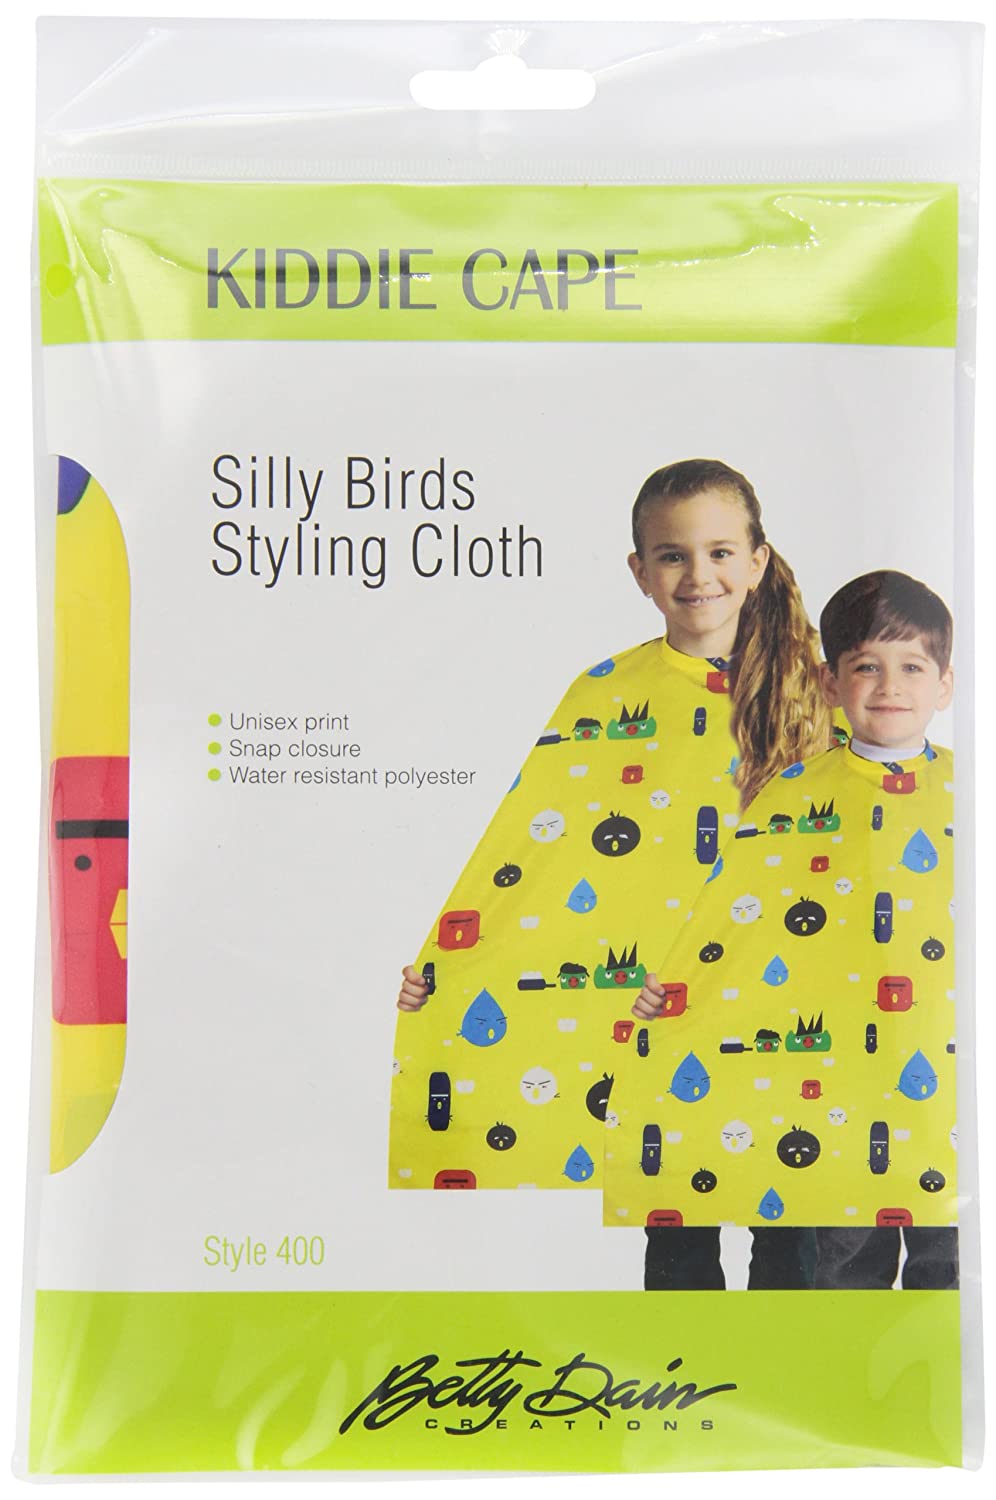 Silly Birds Styling Cloth